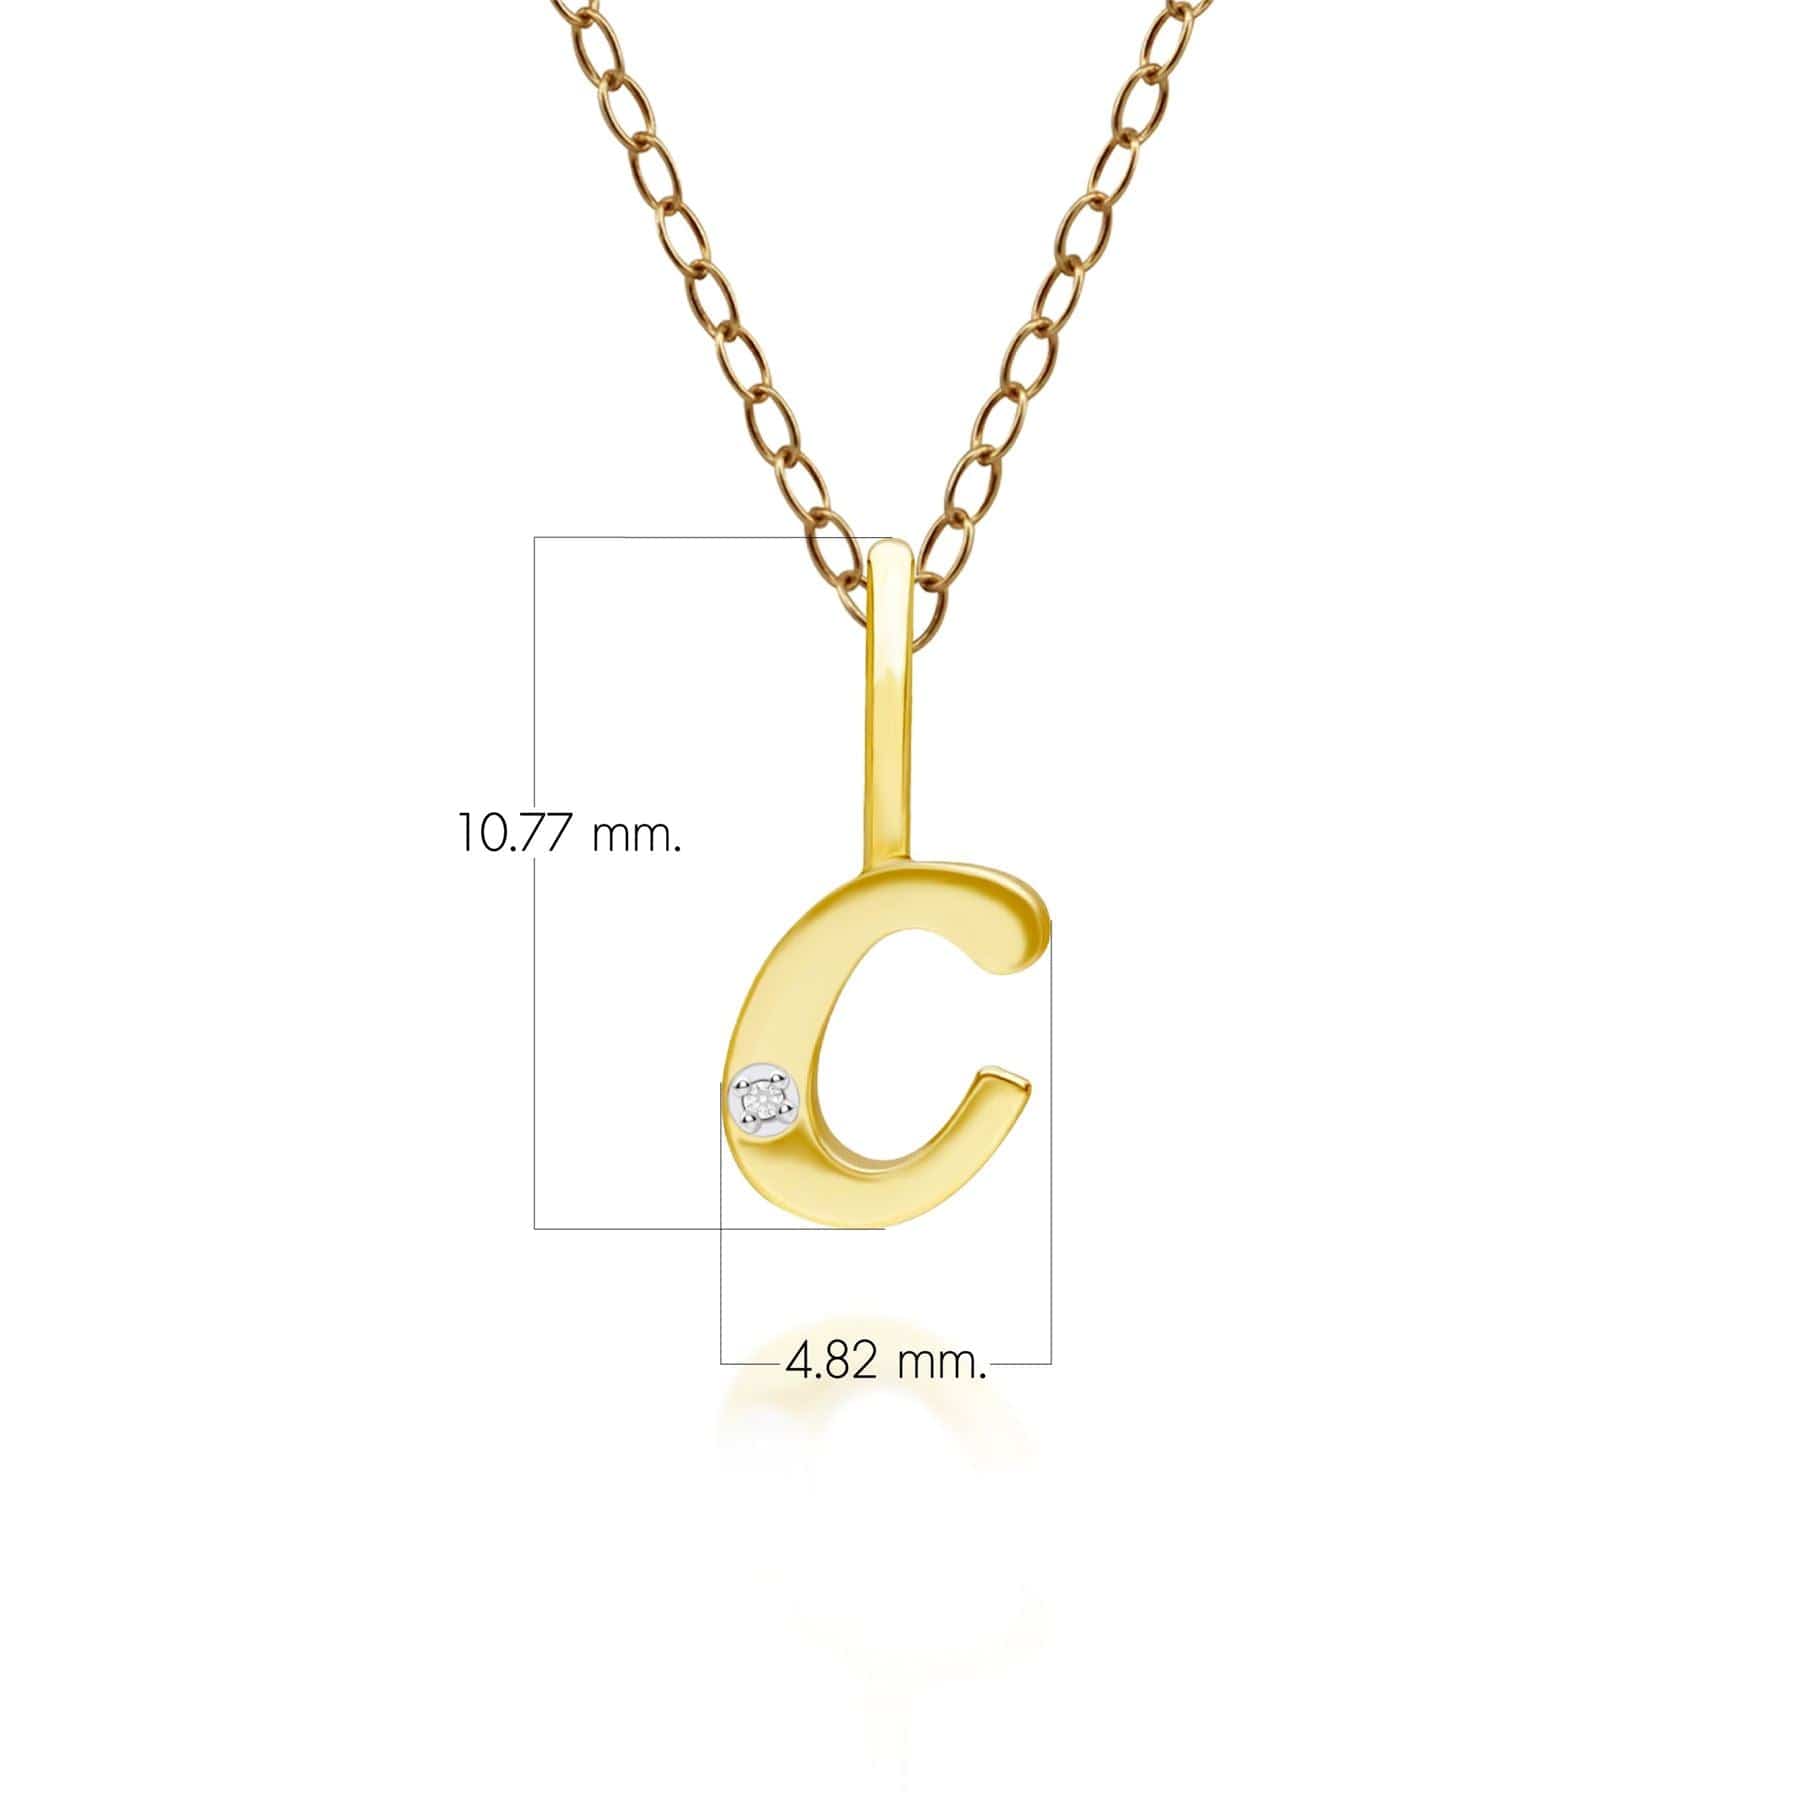 191P0774019 Alphabet Letter C Diamond pendant in 9ct Yellow Gold Dimensions